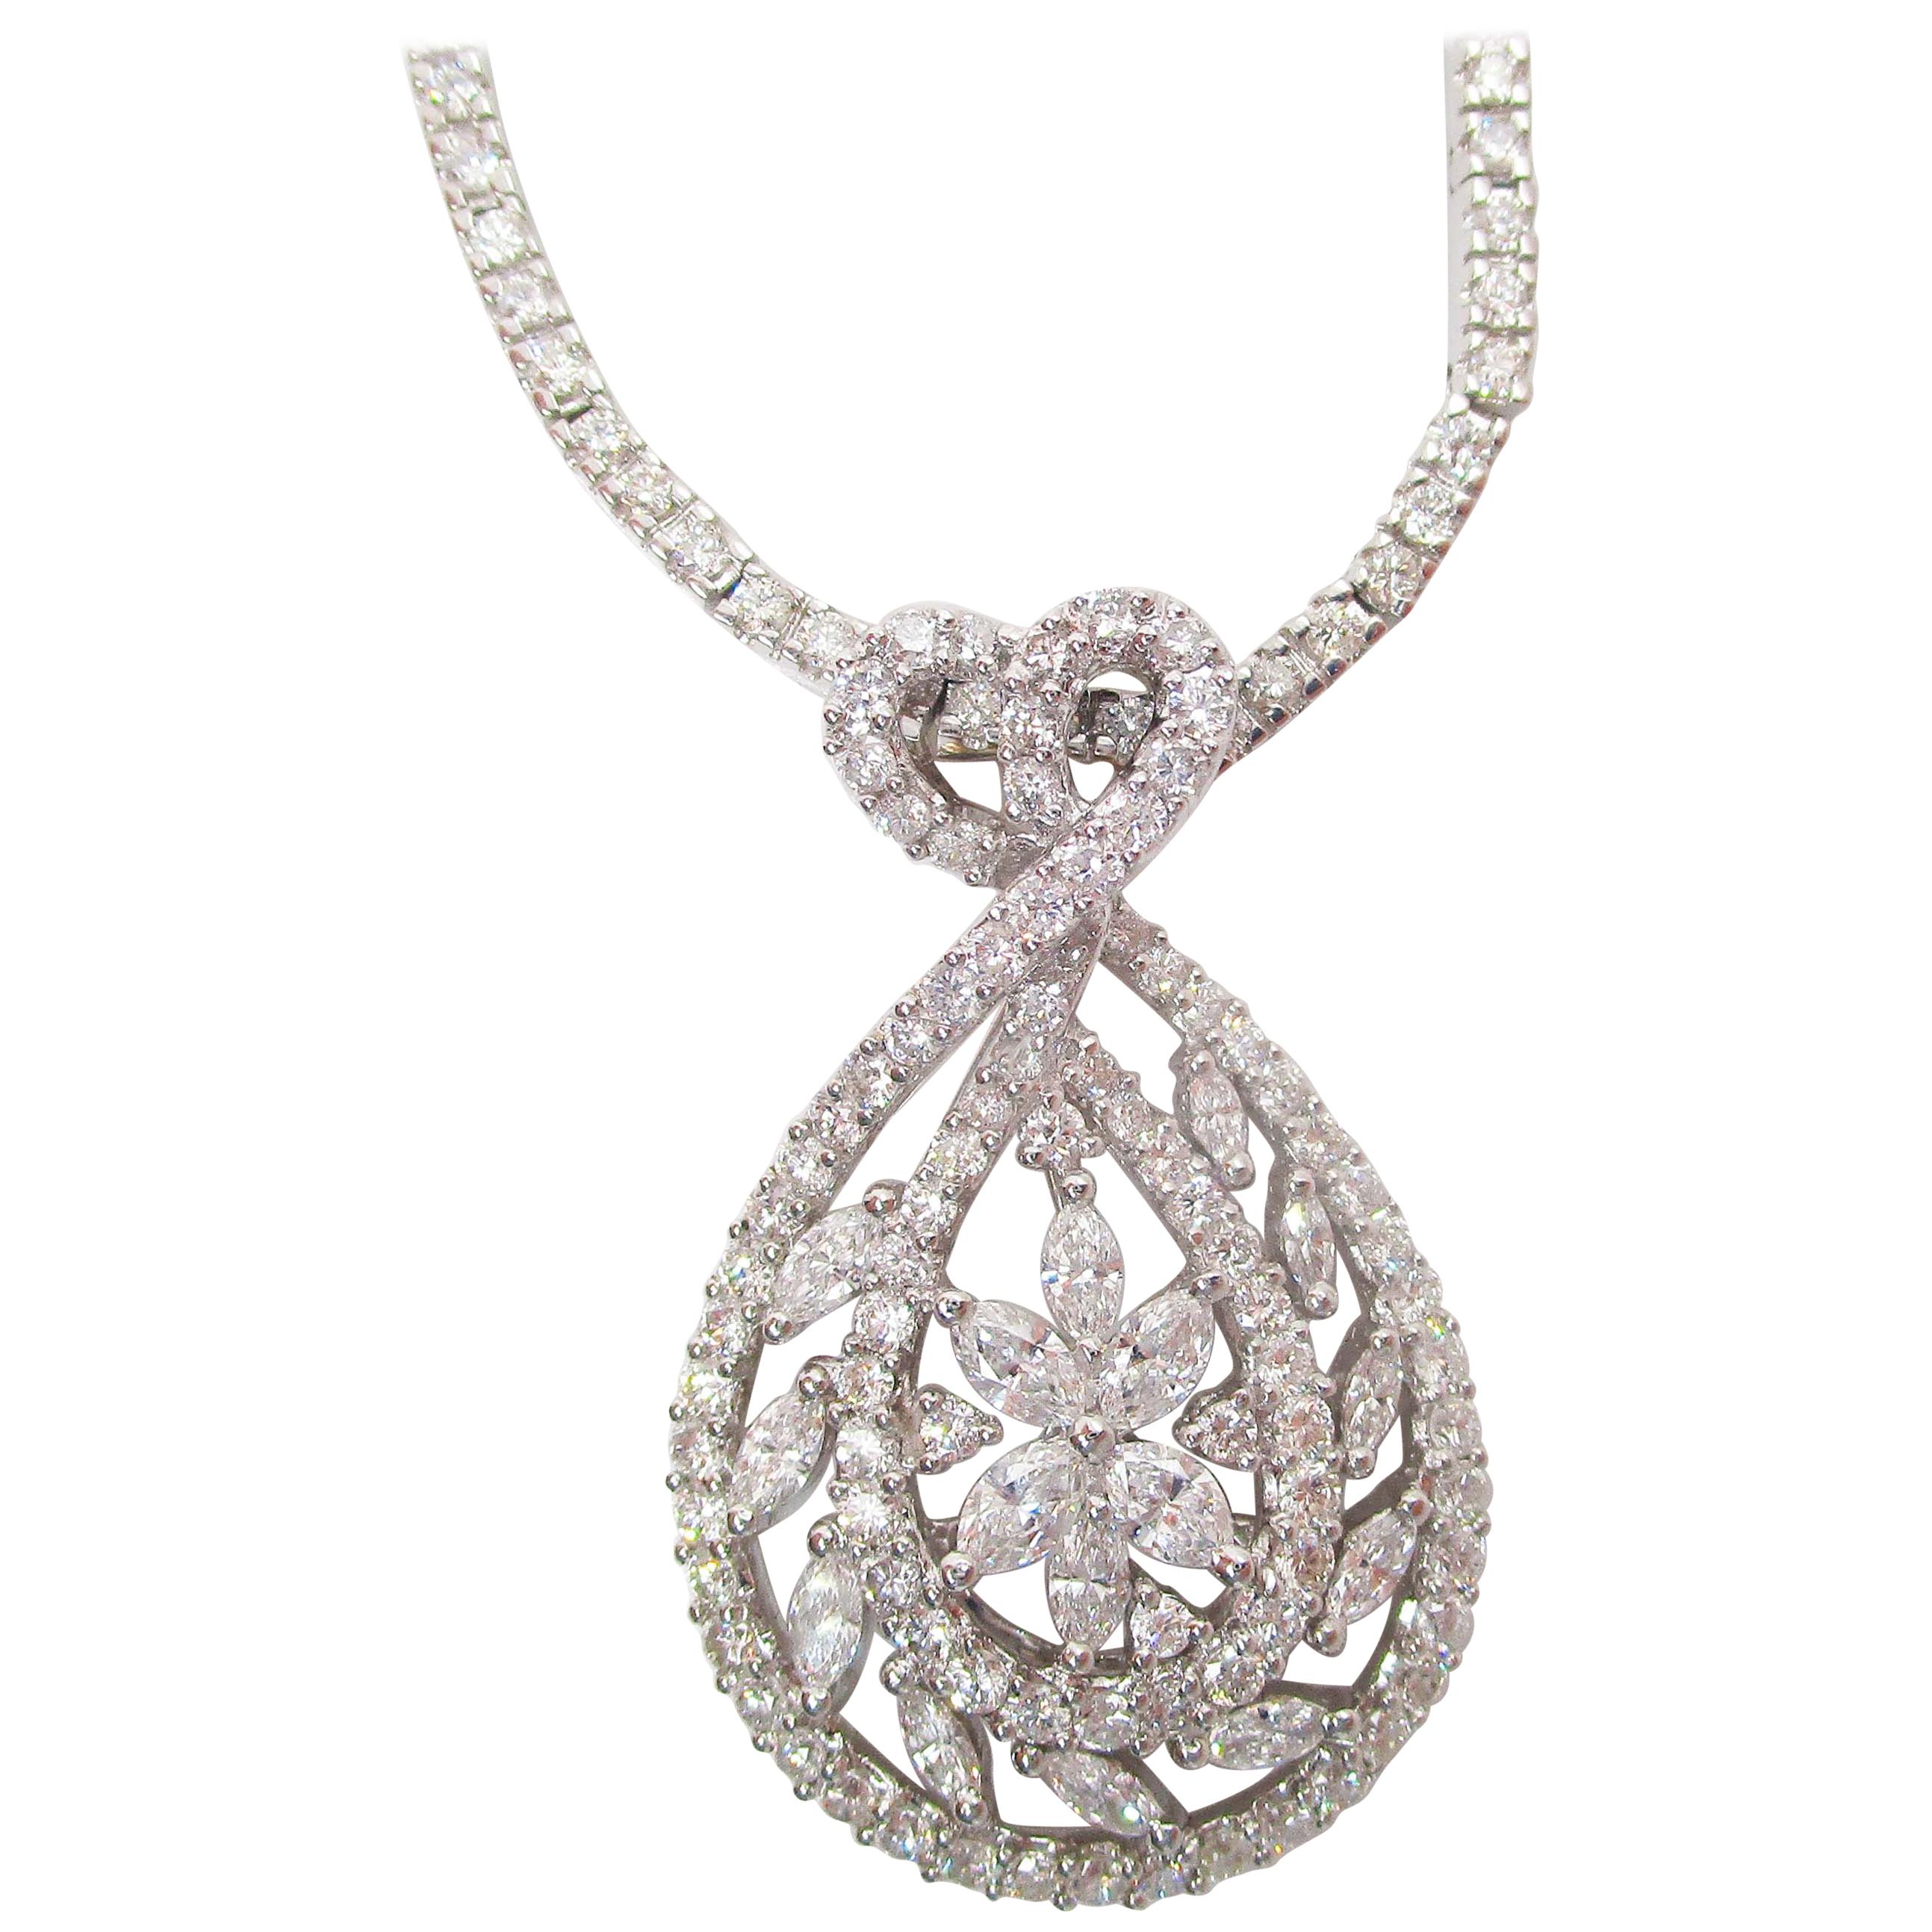 18 Karat Gold Diamond Necklace with Removable 18 Karat Diamond Teardrop Pendant For Sale